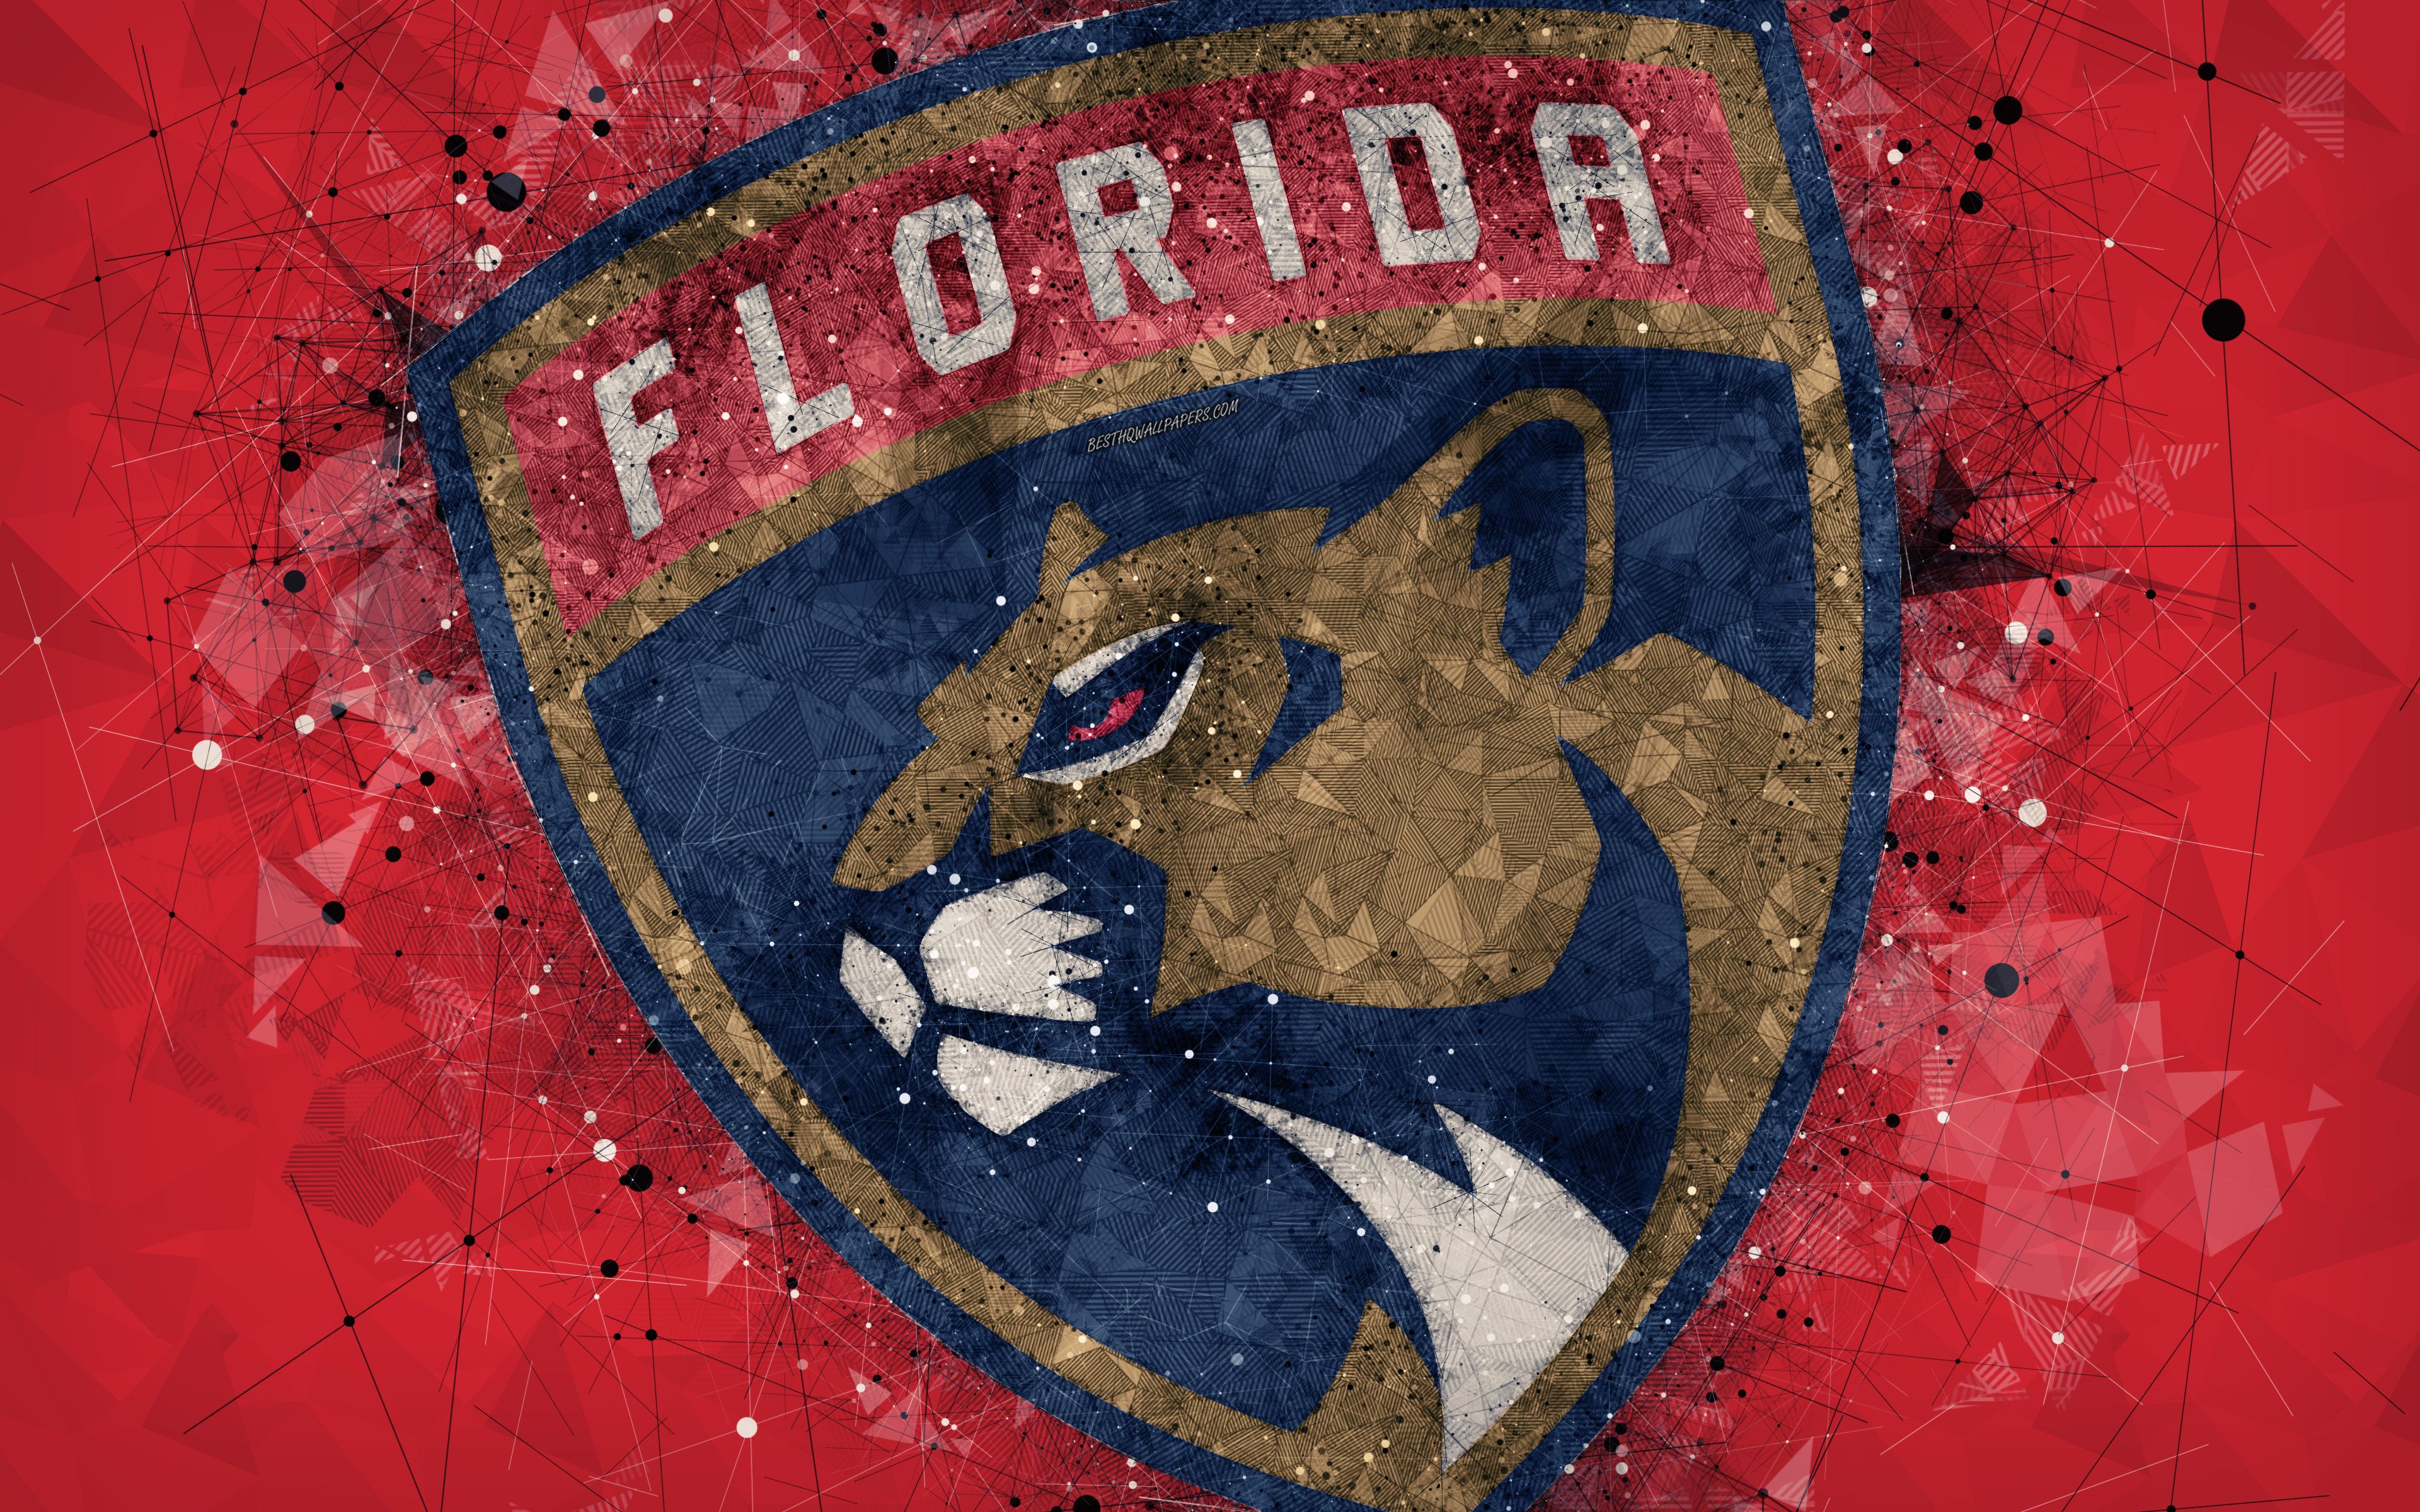 Florida Panthers Wallpaper .teahub.io